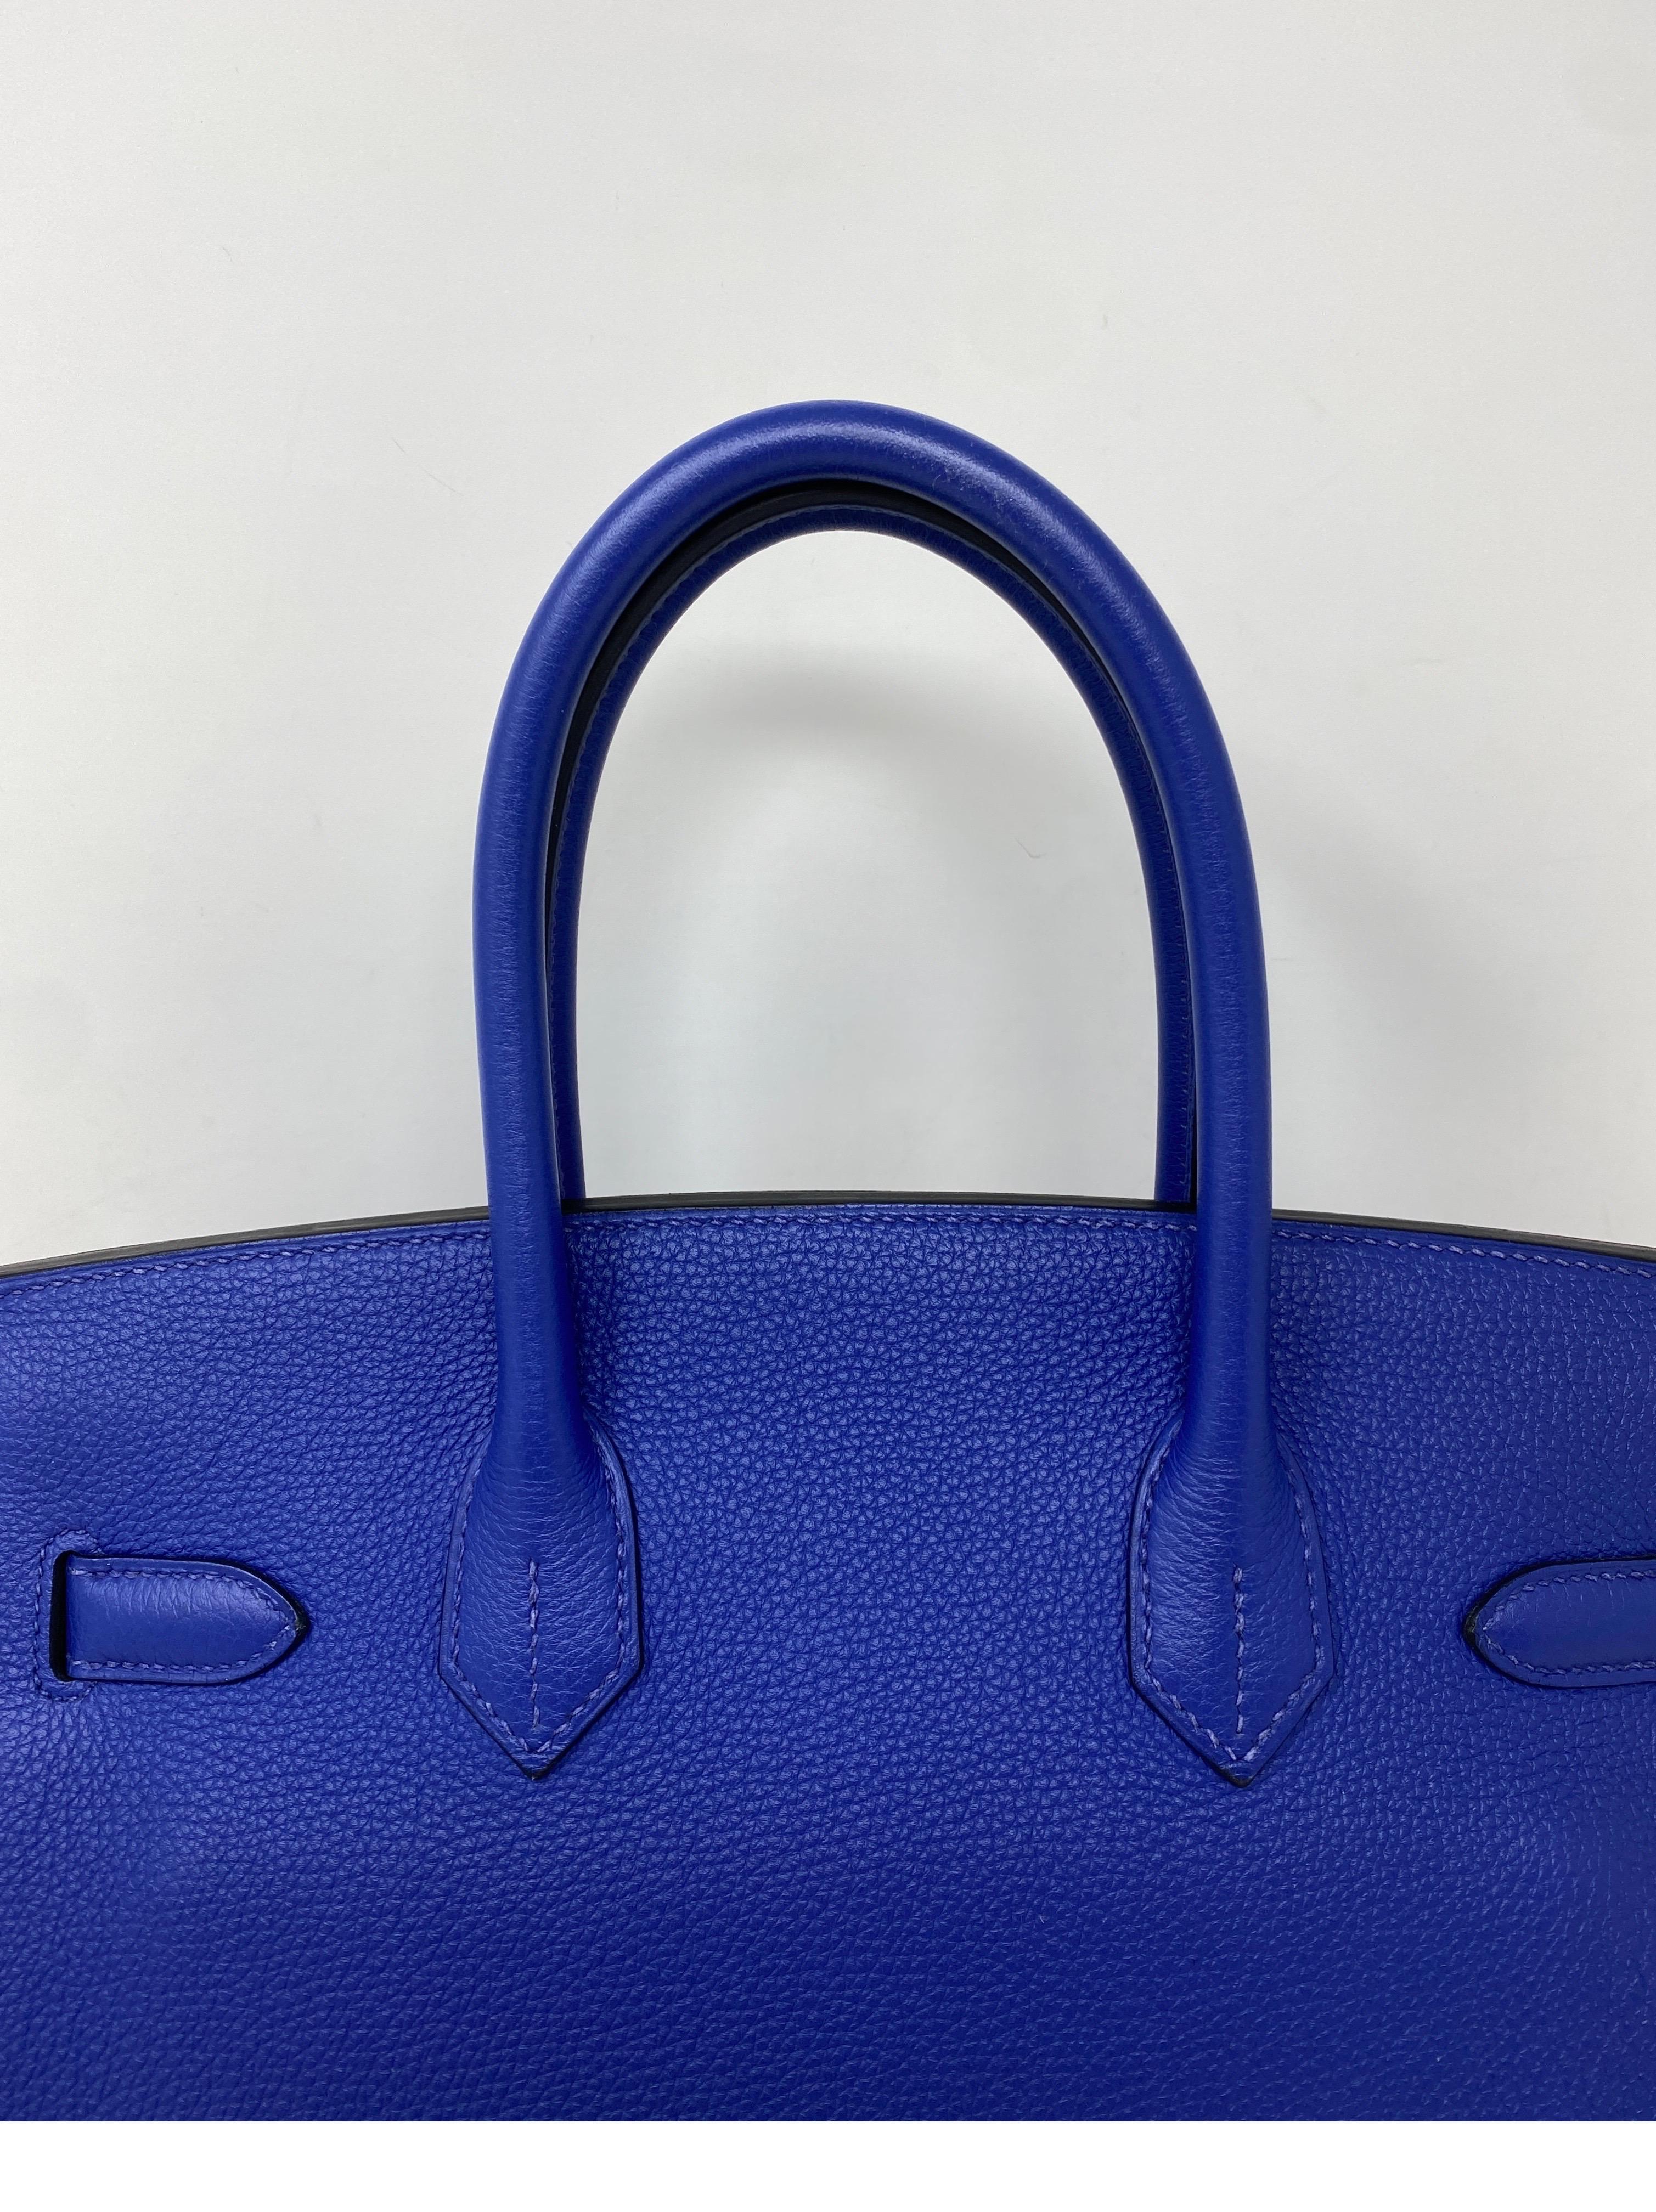 Hermès - Sac Birkin 35 Electrique bleu  4